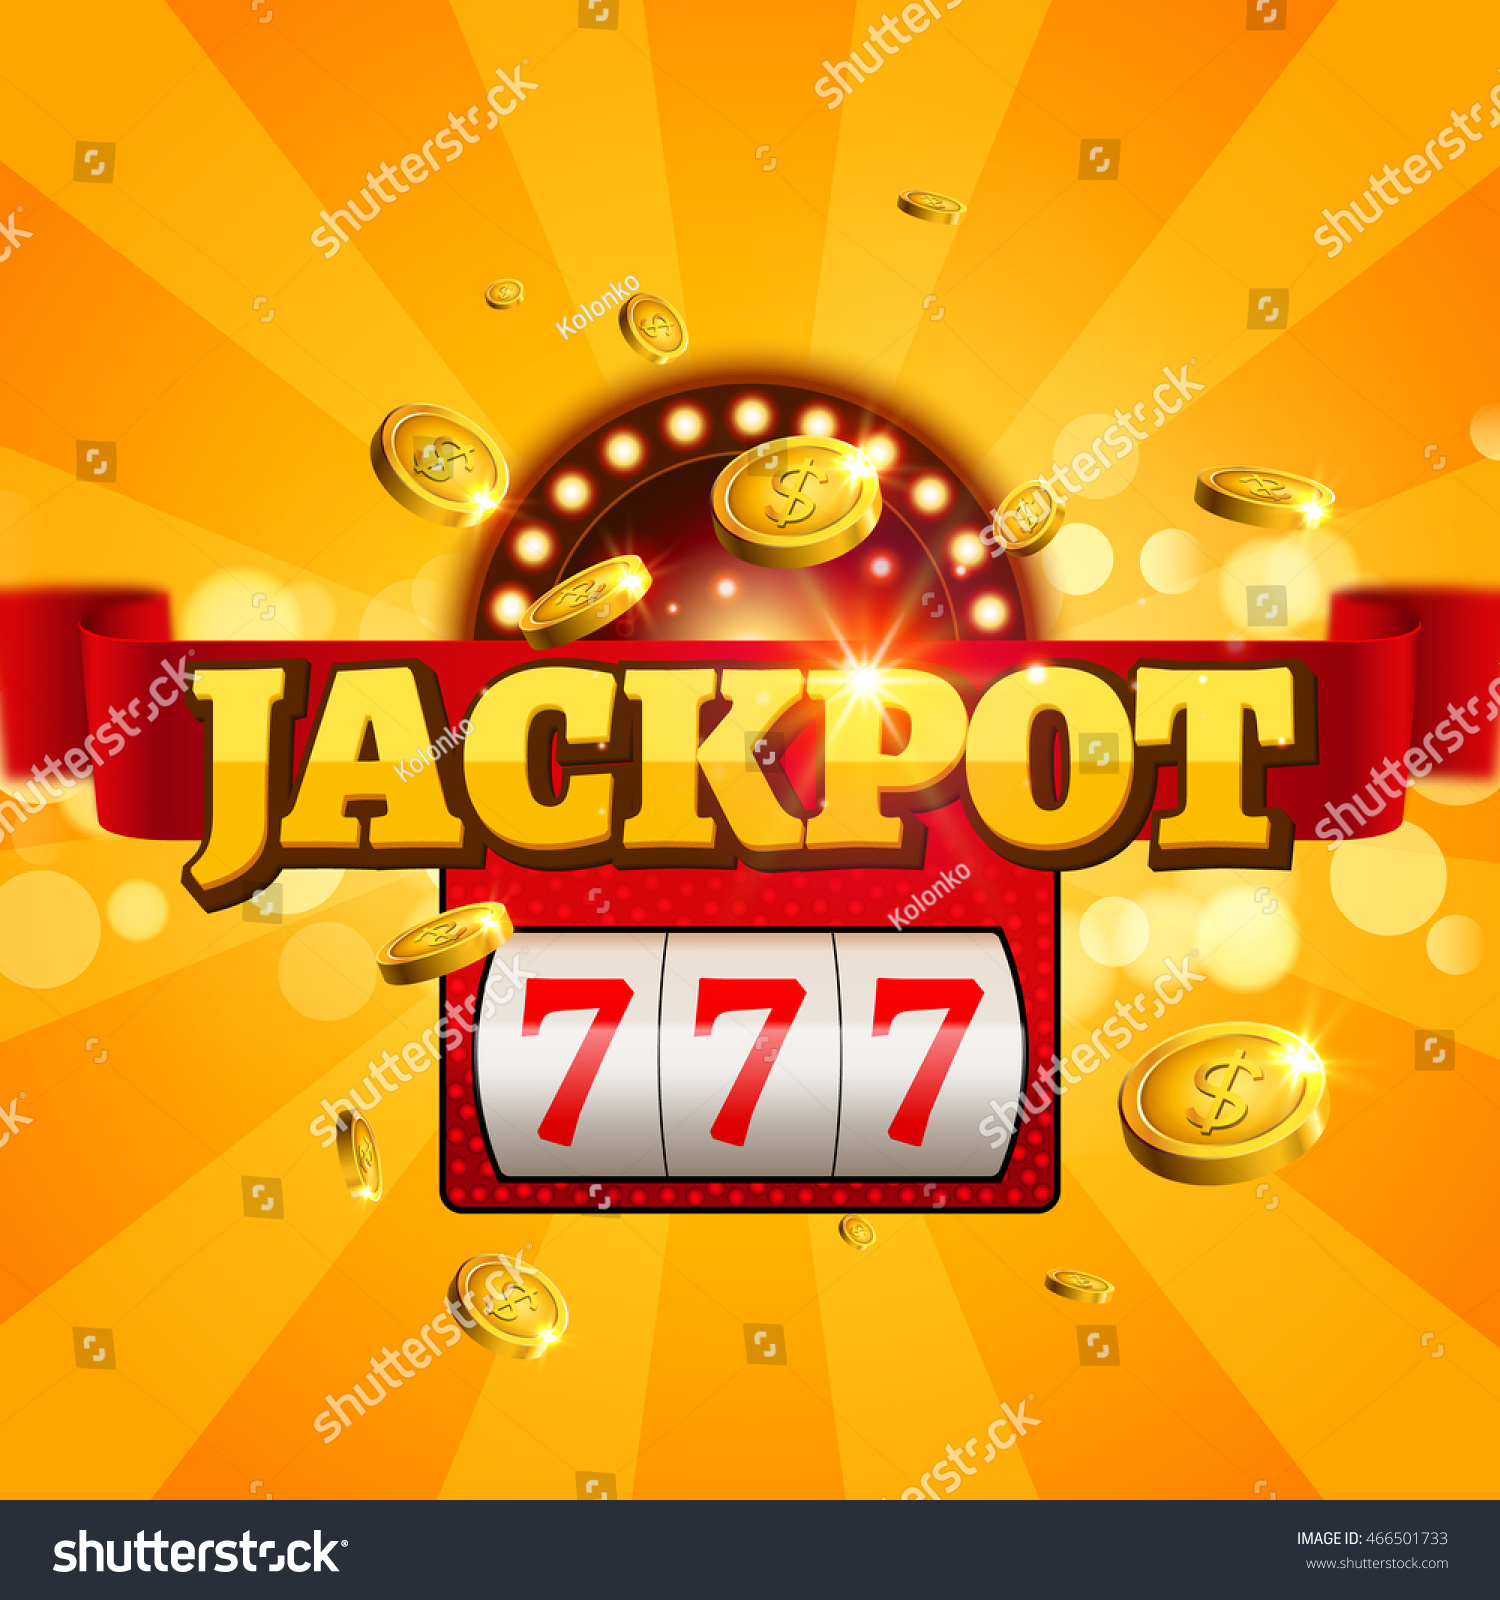 Jackpot 777 Gambling Poster Design Money Stock Vector 466501733 - Shutterstock1500 x 1600